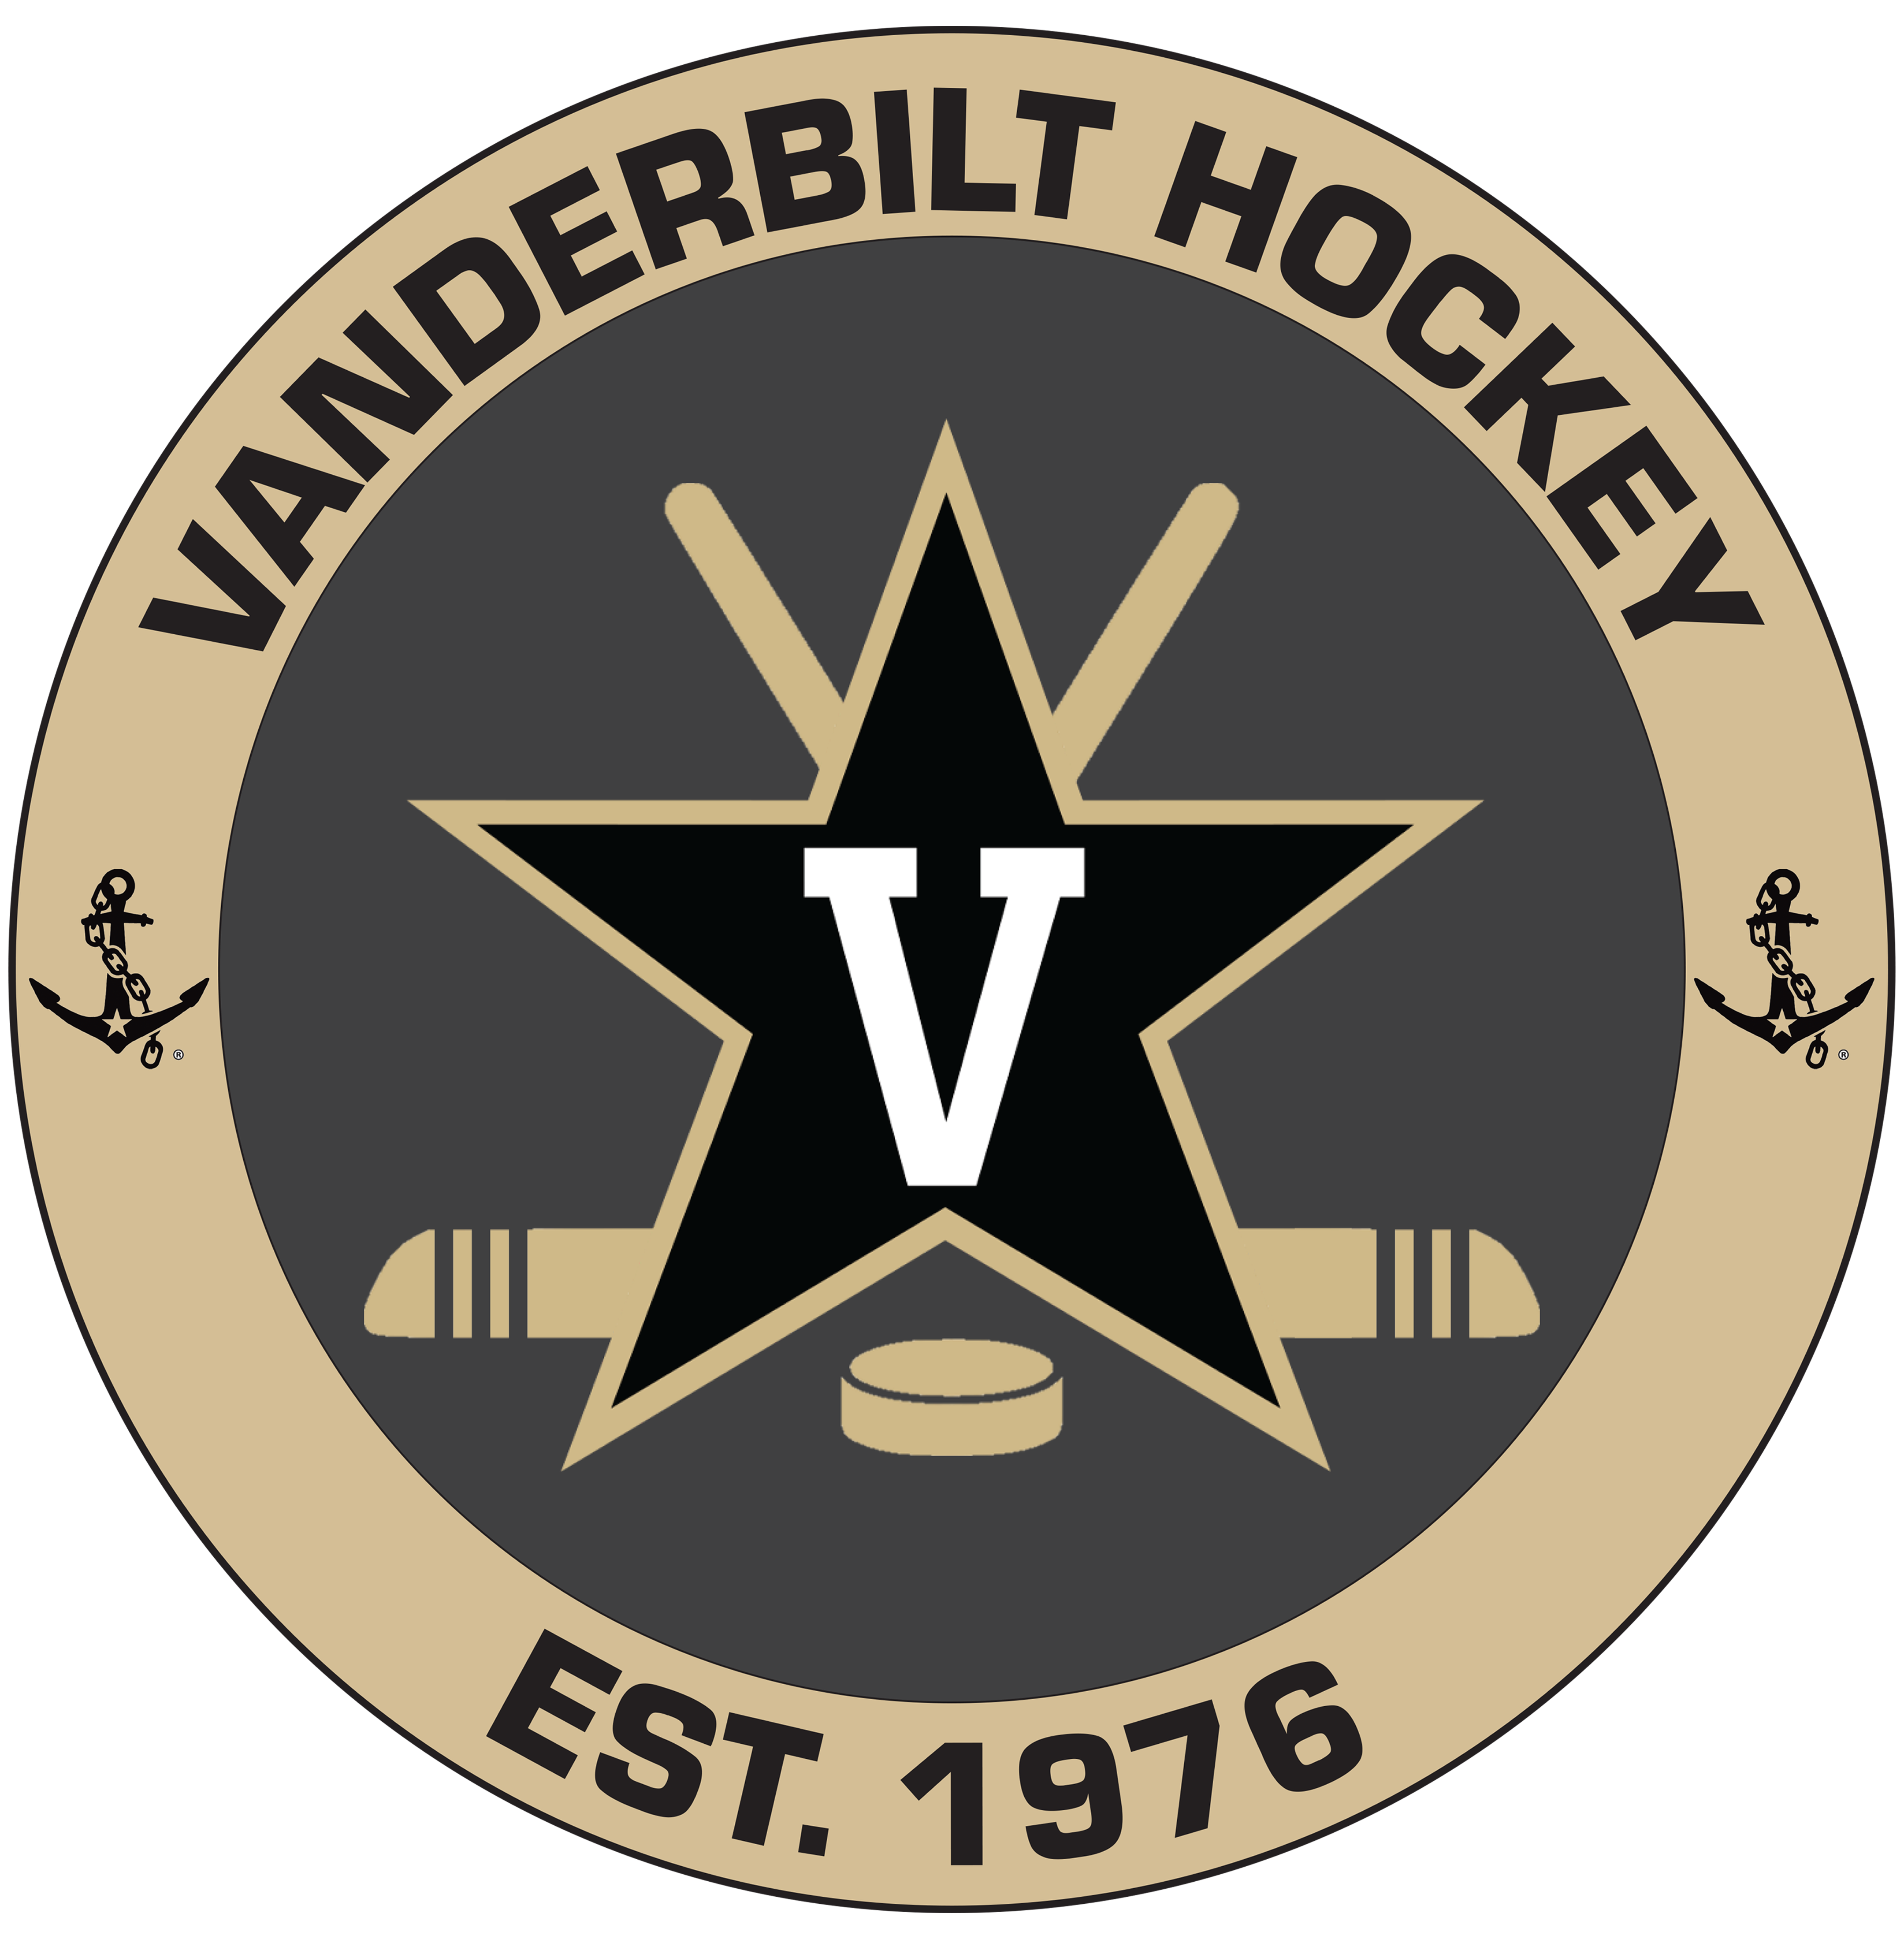 Vanderbilt Club Hockey